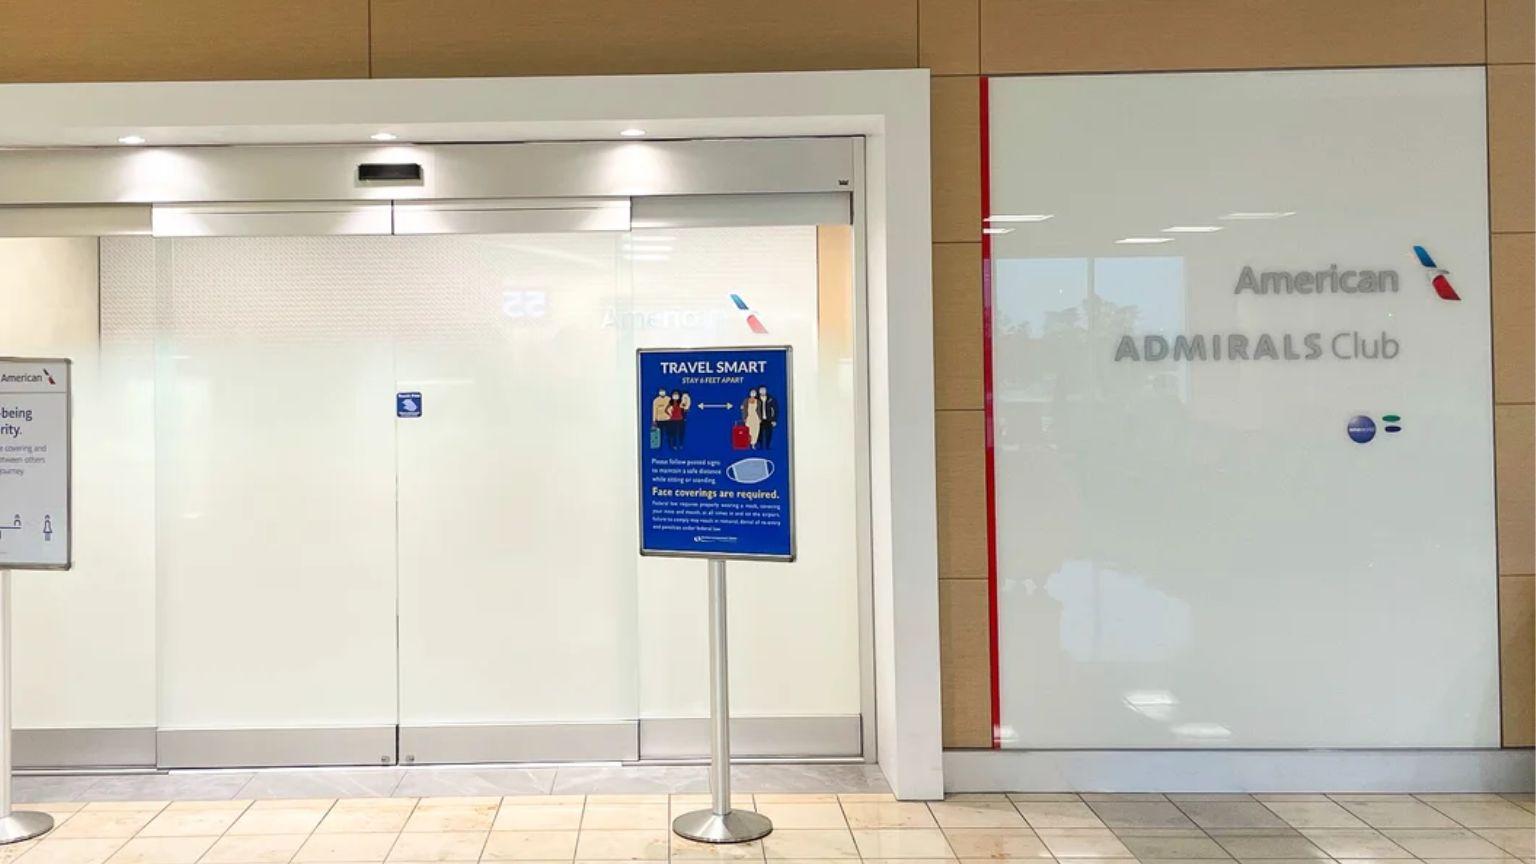 American Airlines Admirals Club Lounge Orlando, Terminal B – Airside 3